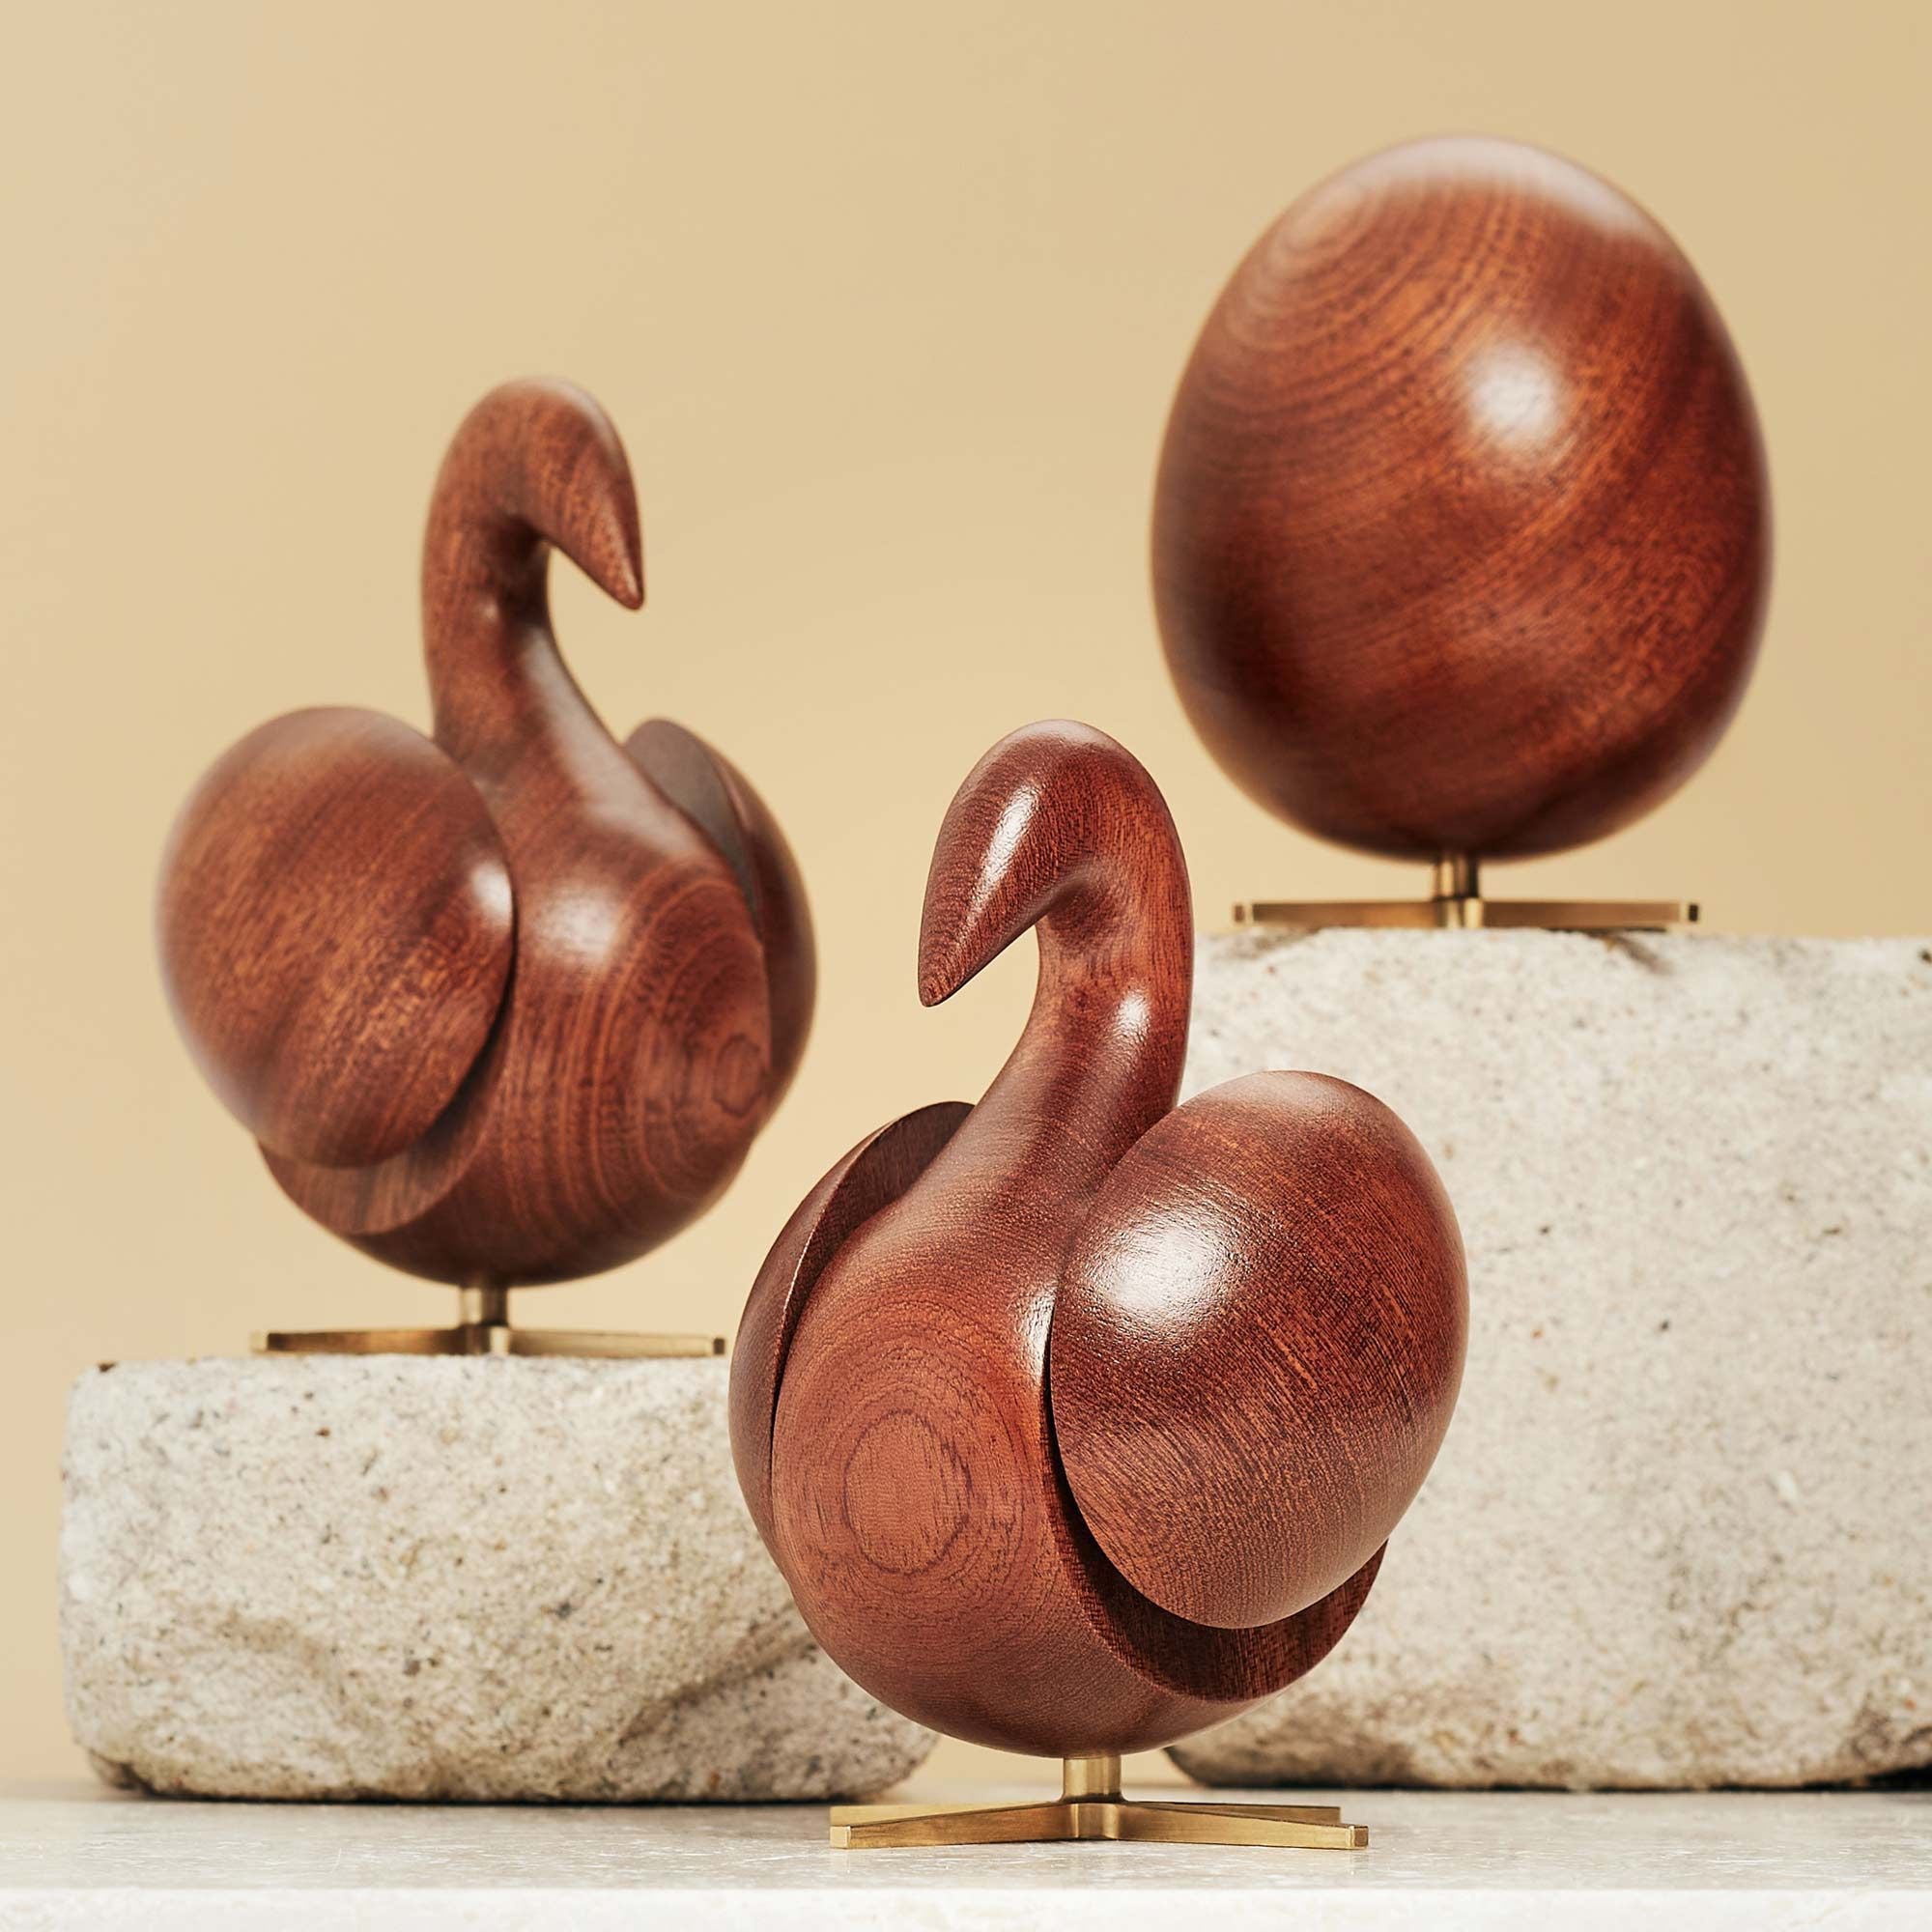 Brainchild The Egg Wooden Figure Mahogany, Brass Base